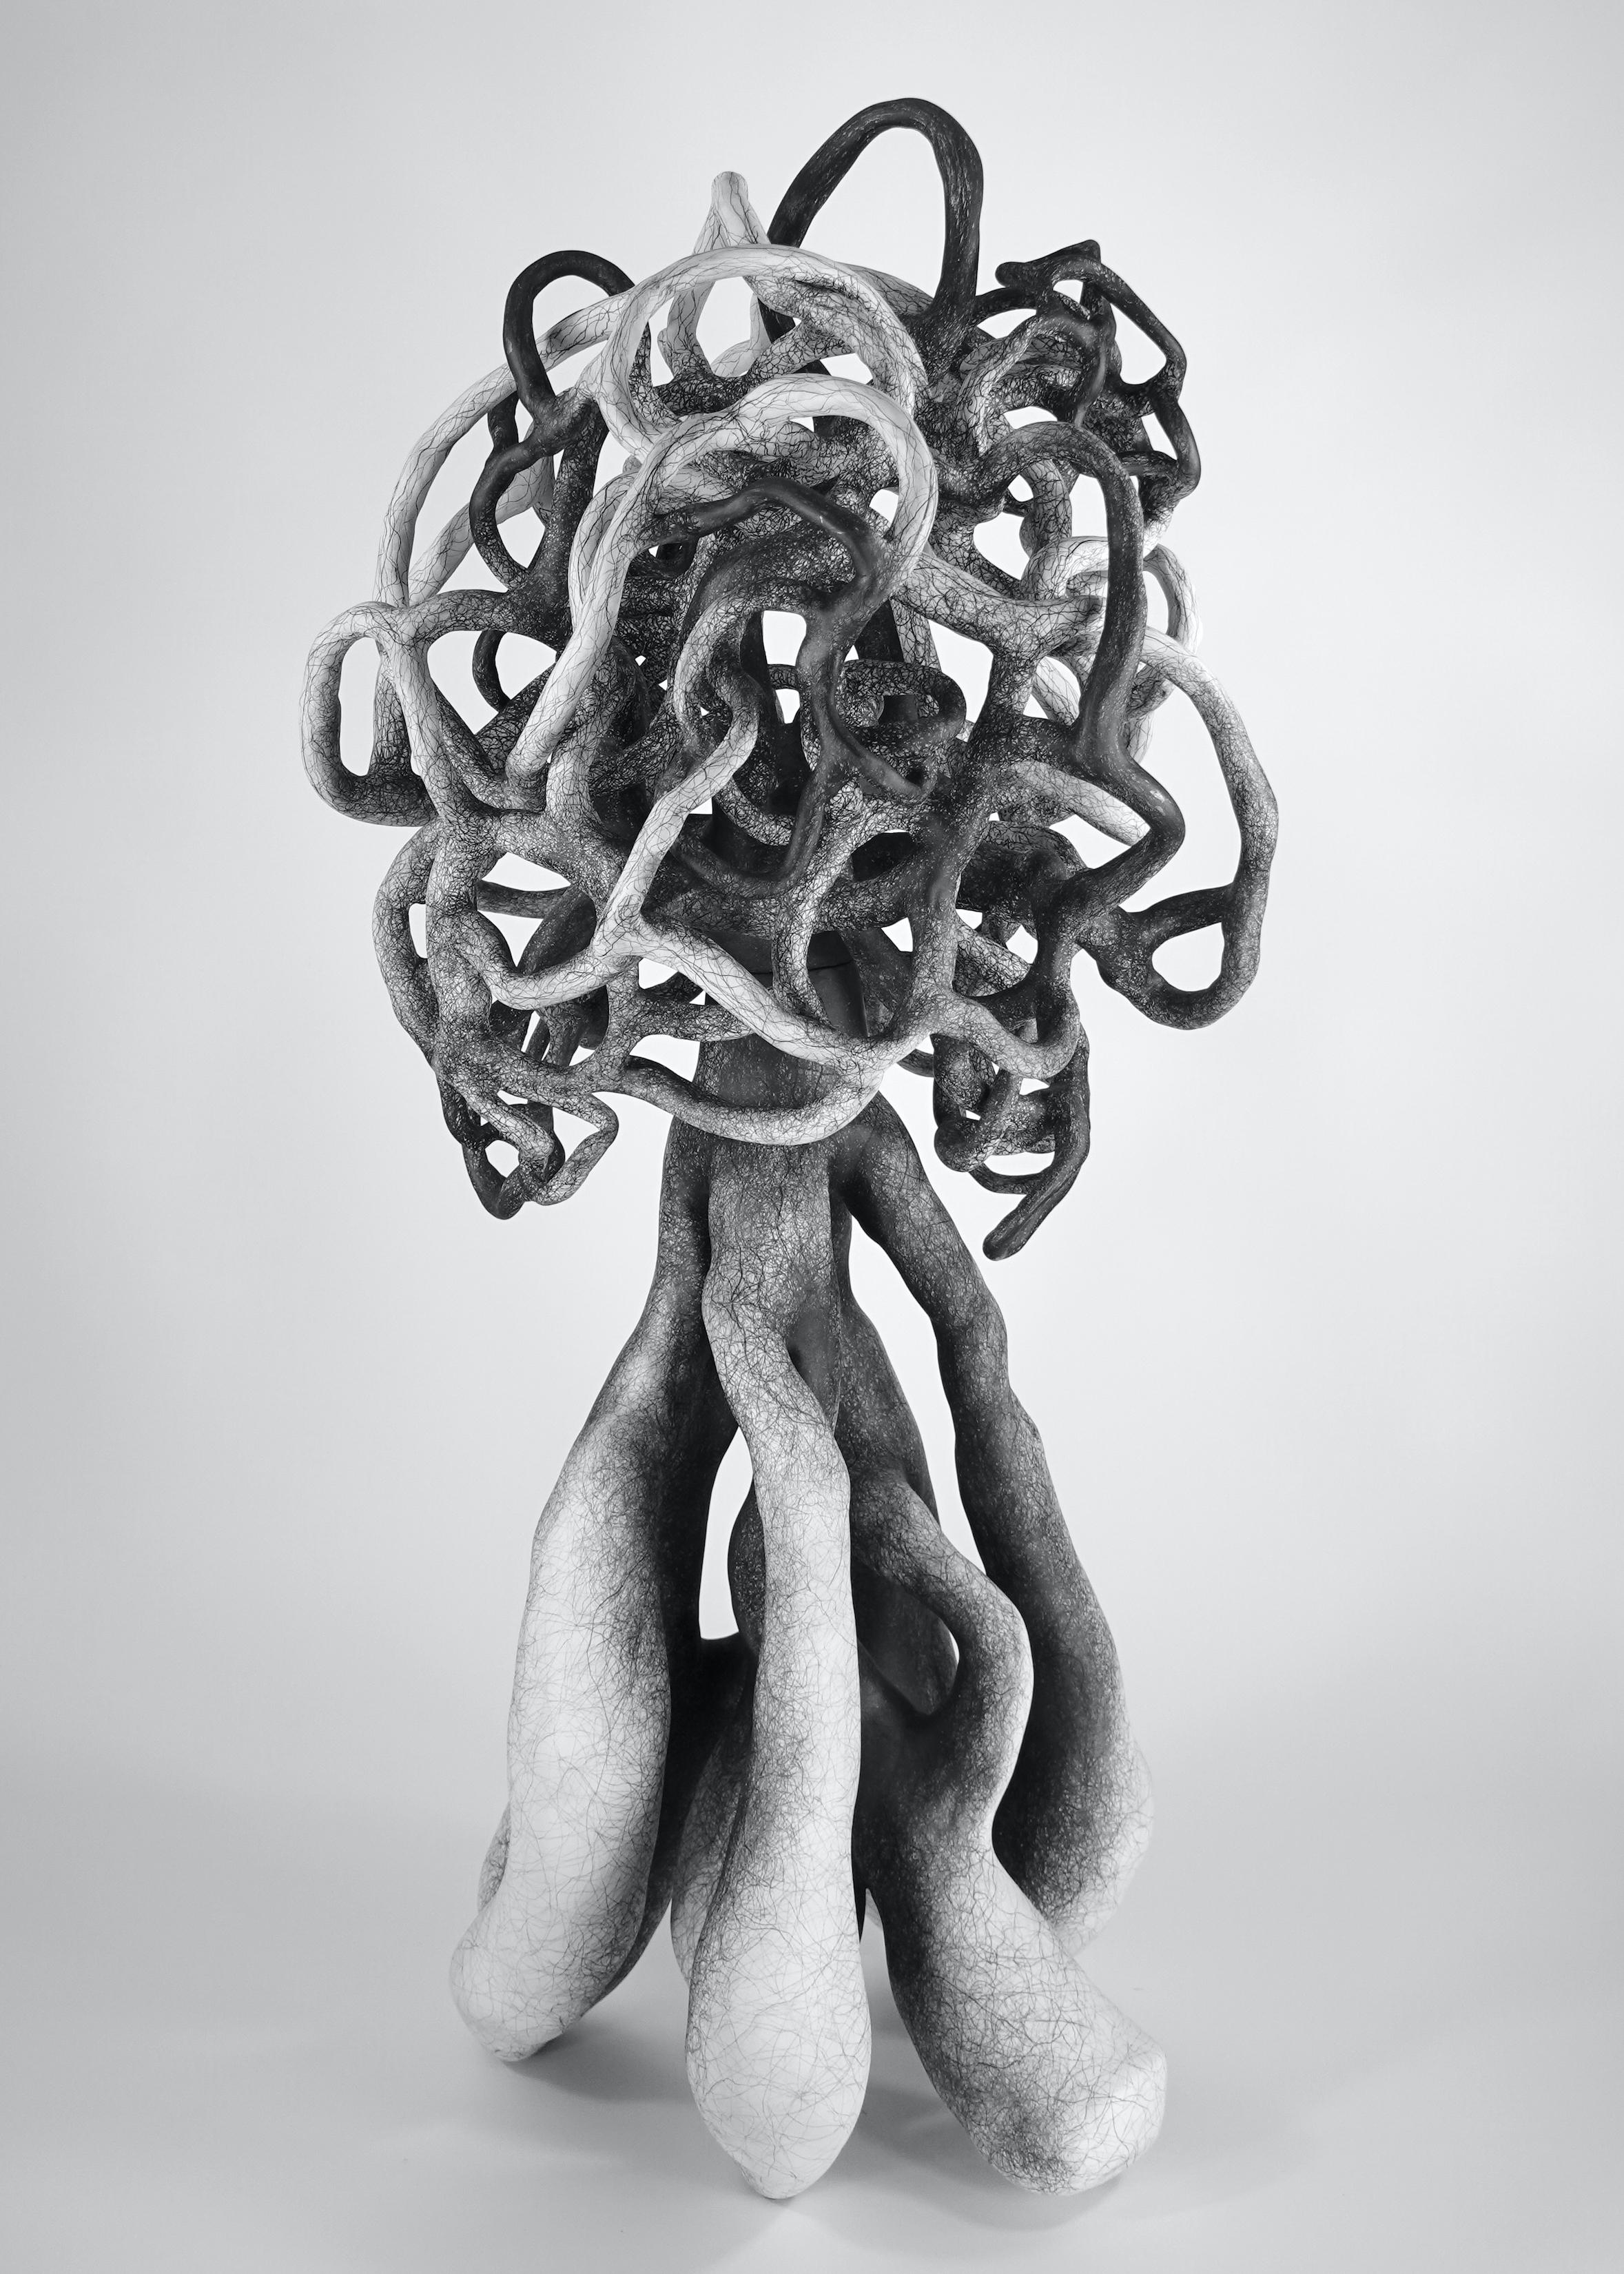 Judi Tavill Abstract Sculpture - Abstract Minimal Clay Sculpture: 'Escalate'